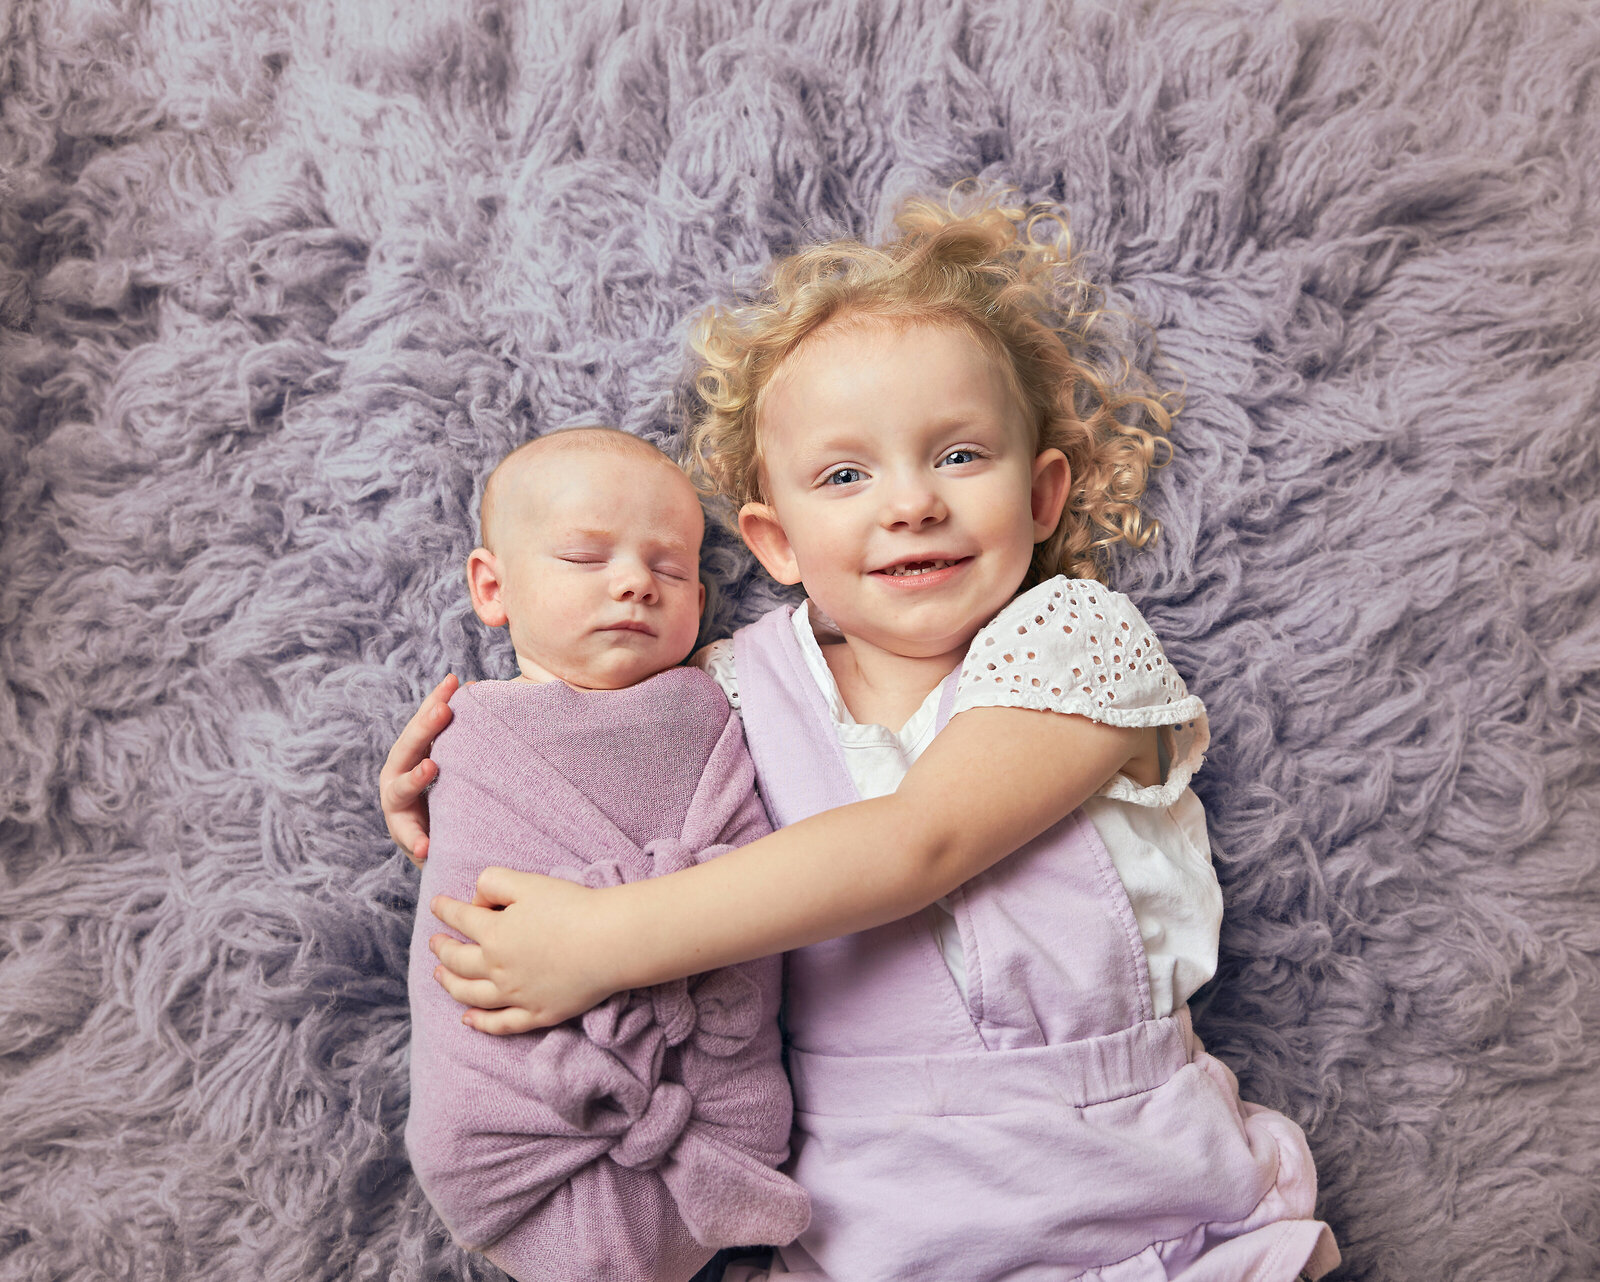 atlanta-best-award-winning-children-kids-portrait-studio-purple-shag-fine-art-young-girl-daughter-with-baby-preschooler-photography-photographer-twin-rivers-02